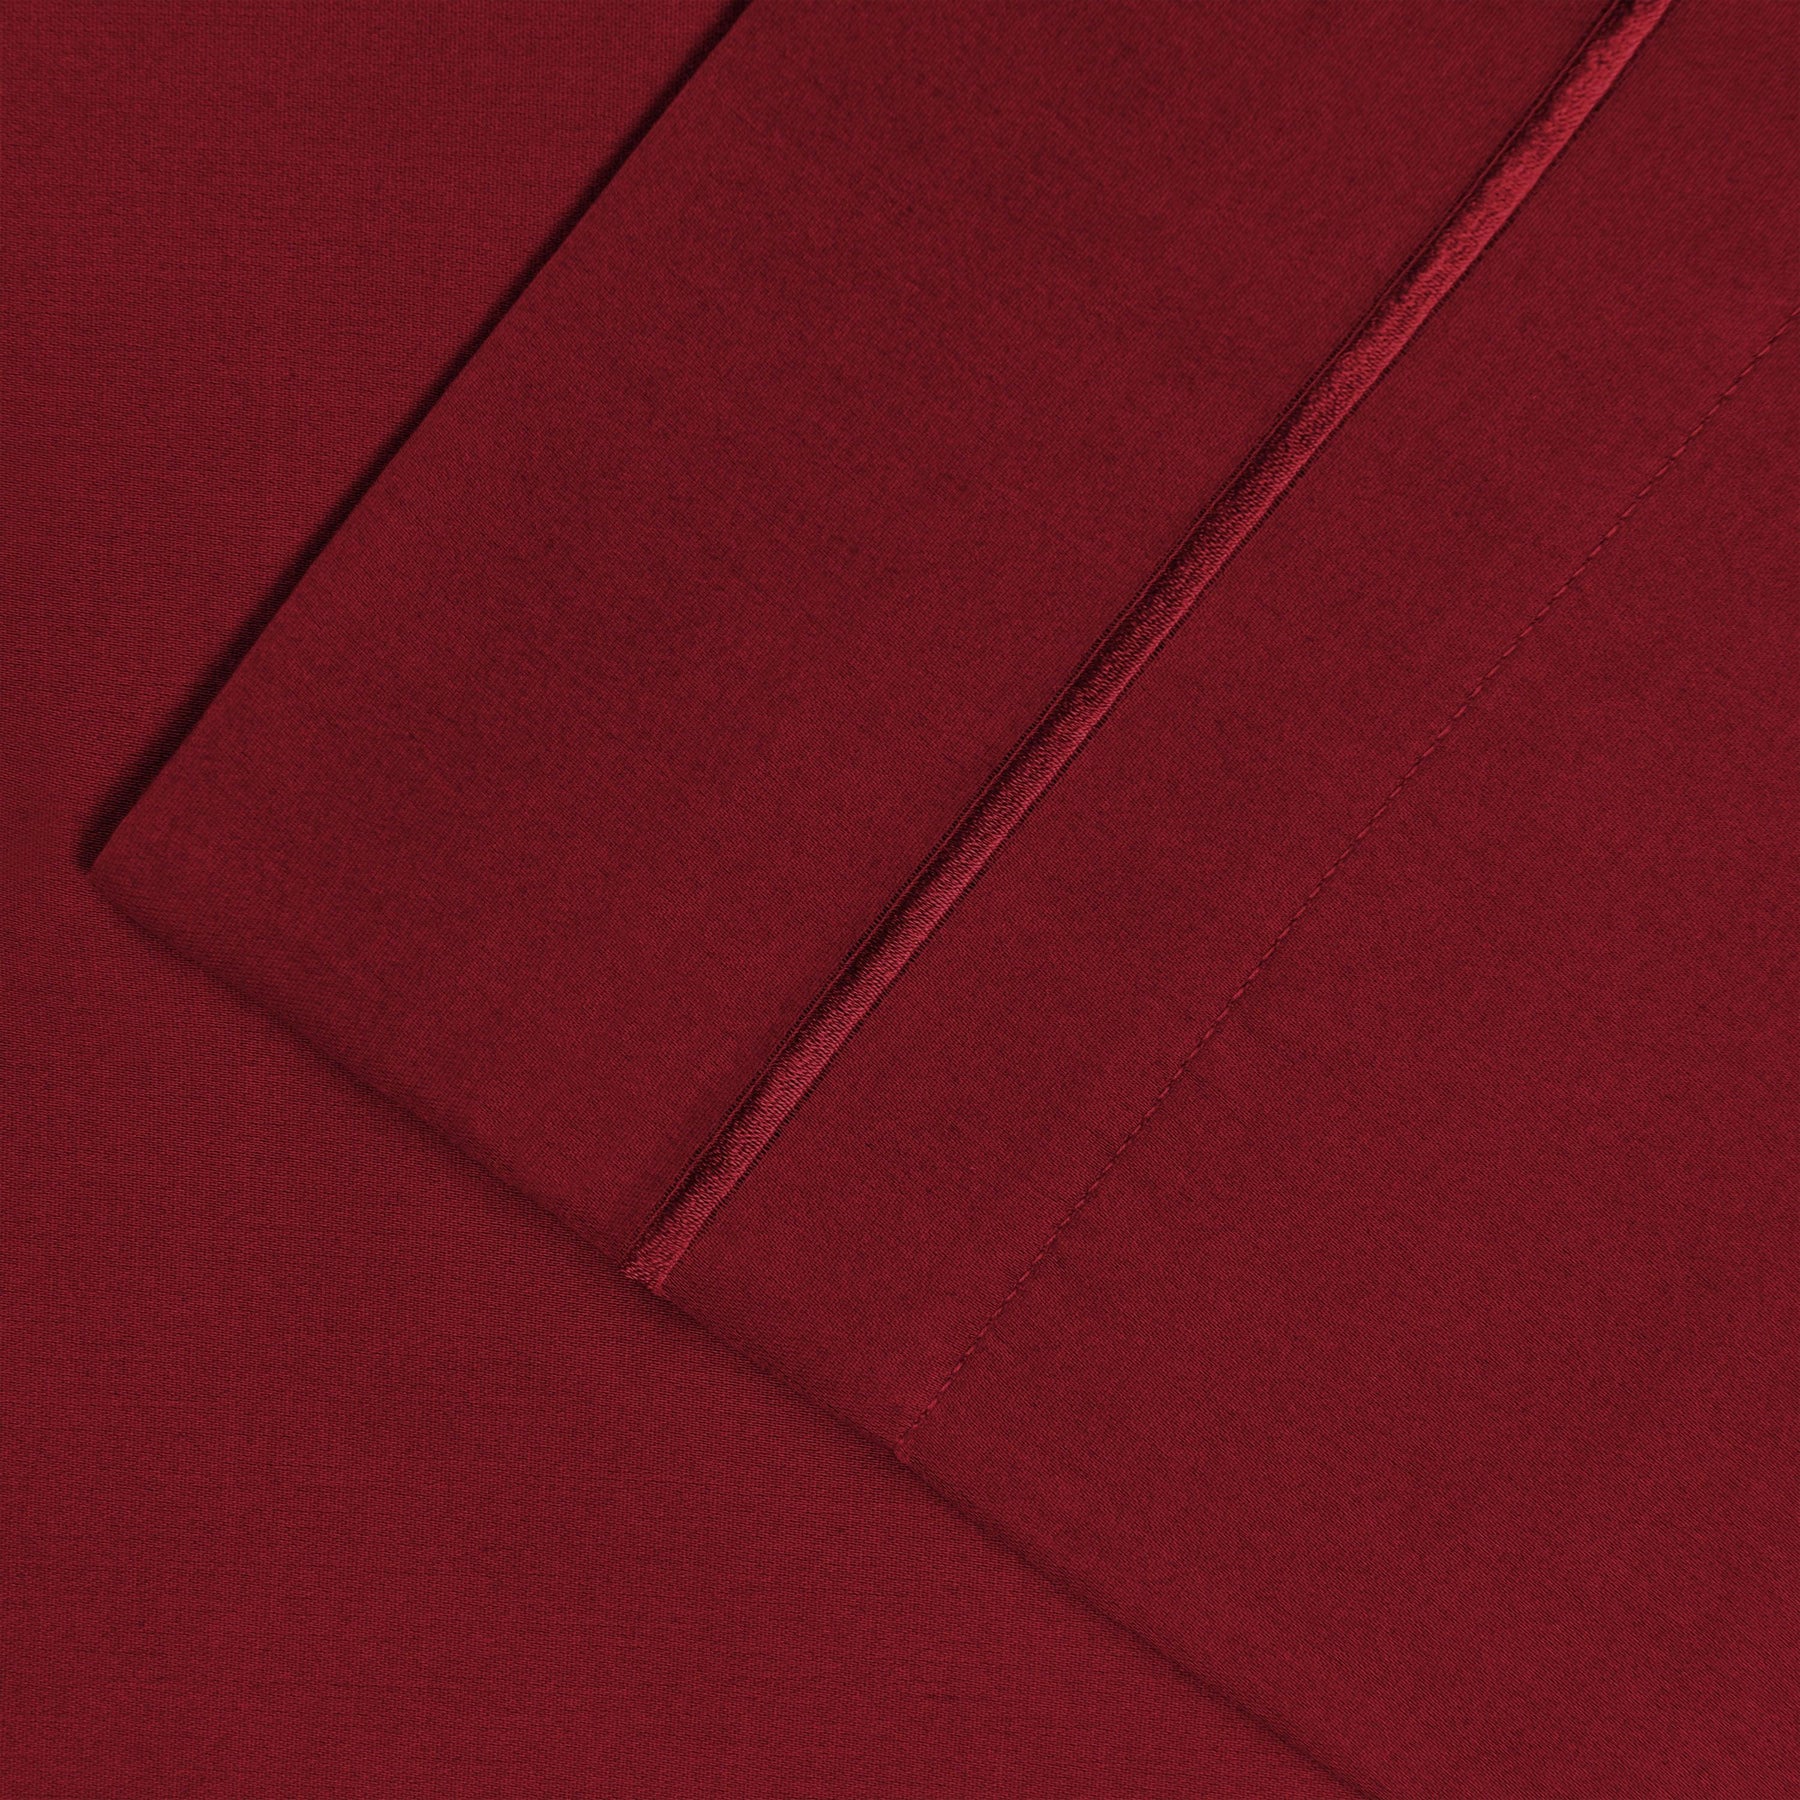  Superior Solid 1500-Thread Count Ultra-Soft Cotton Marrow Stitch Sheet Set - Burgundy